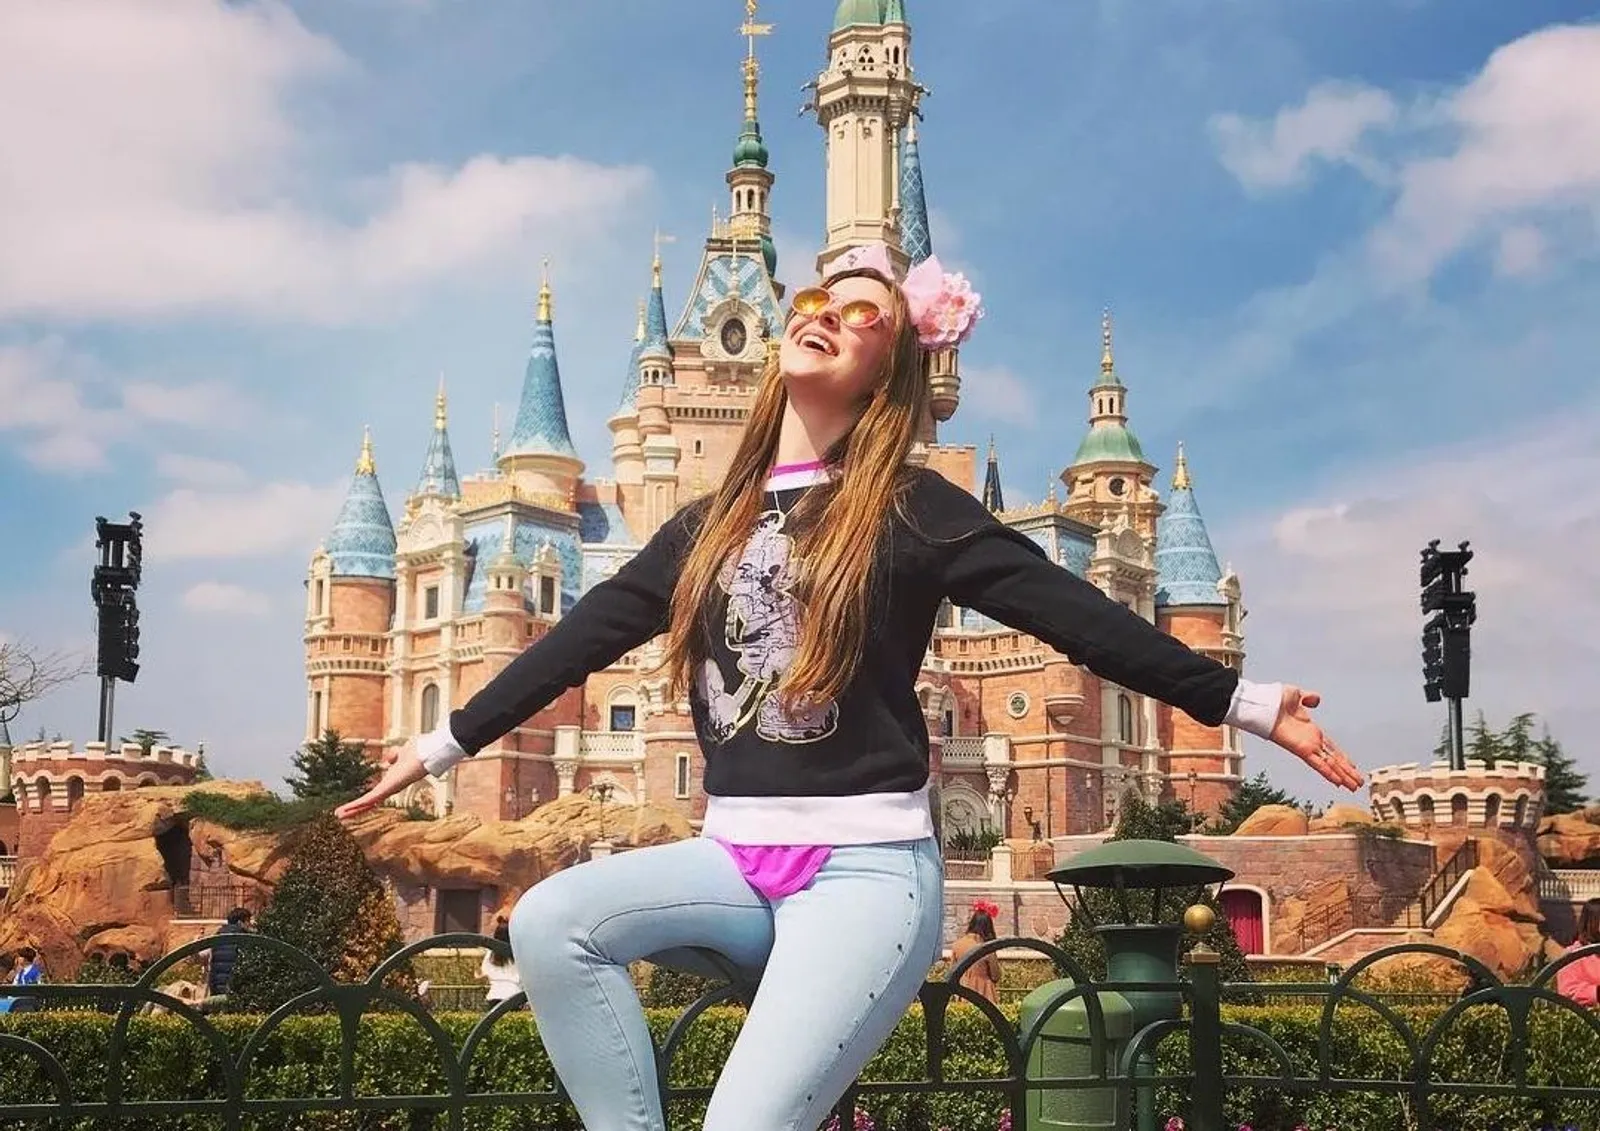 Asik dan Unik, Inilah Spot di Disneyland yang Membuatmu ingin Kesana